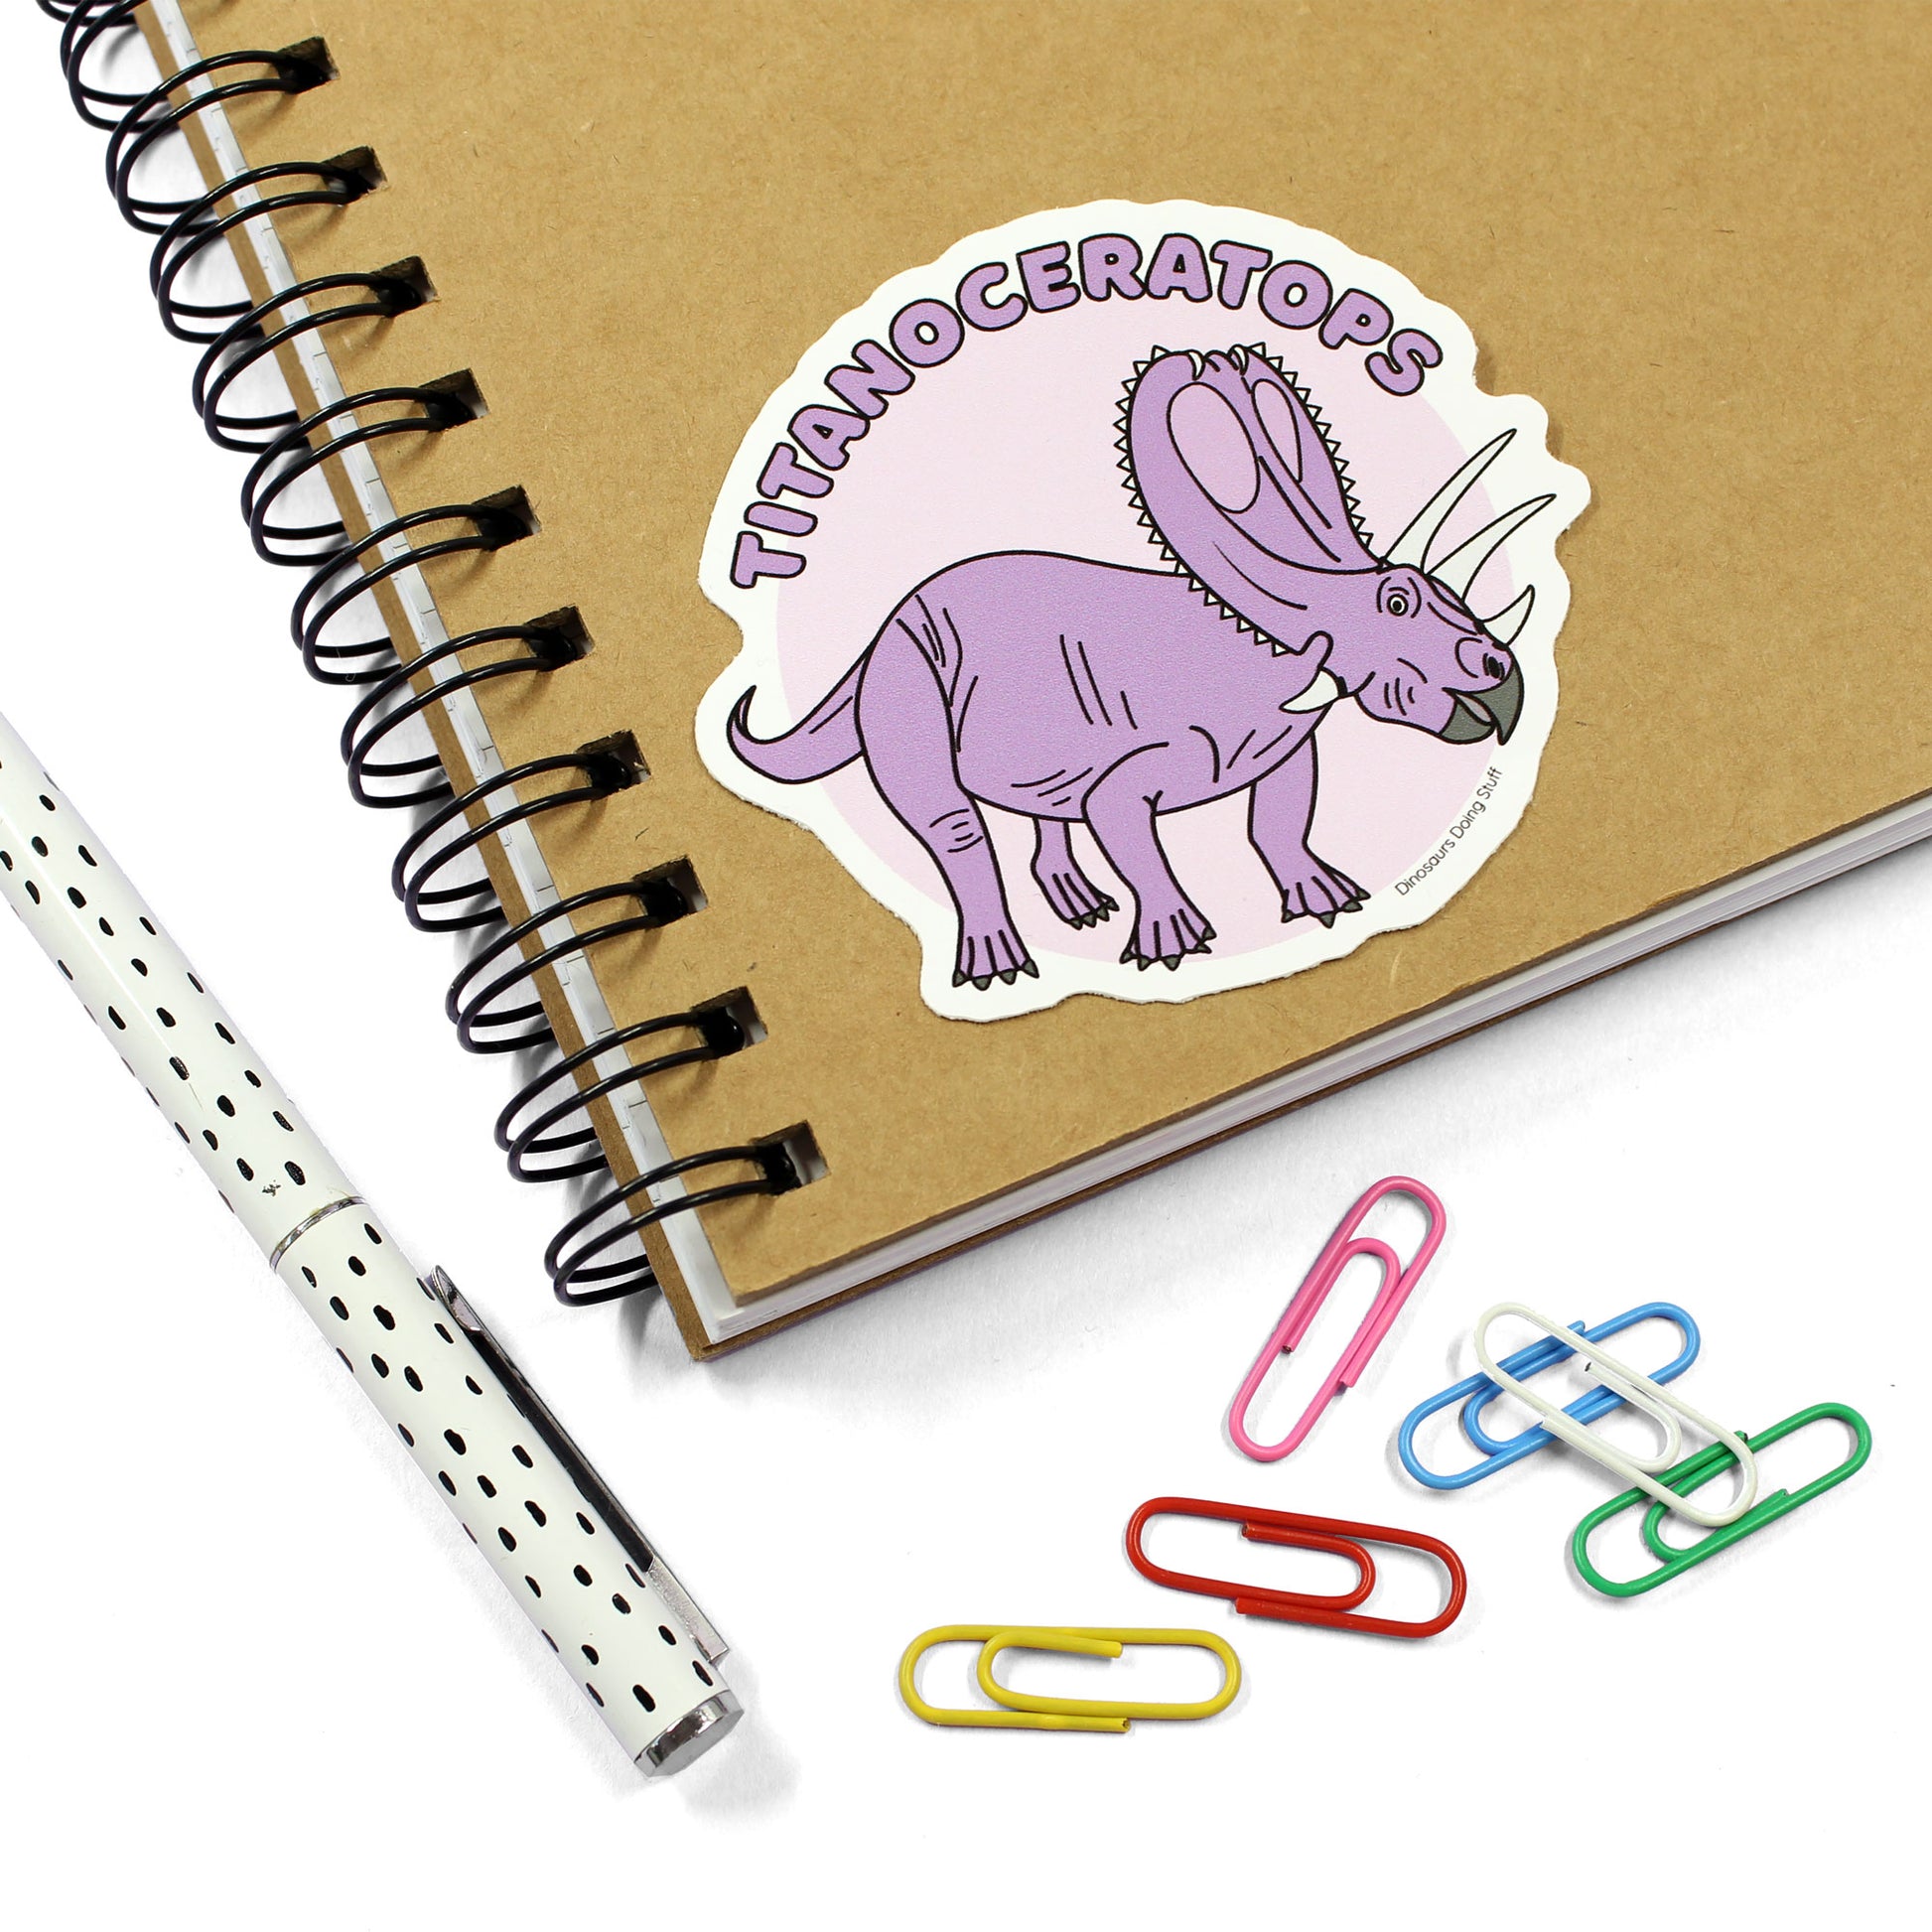 Titanoceratops dinosaur sticker on a notebook